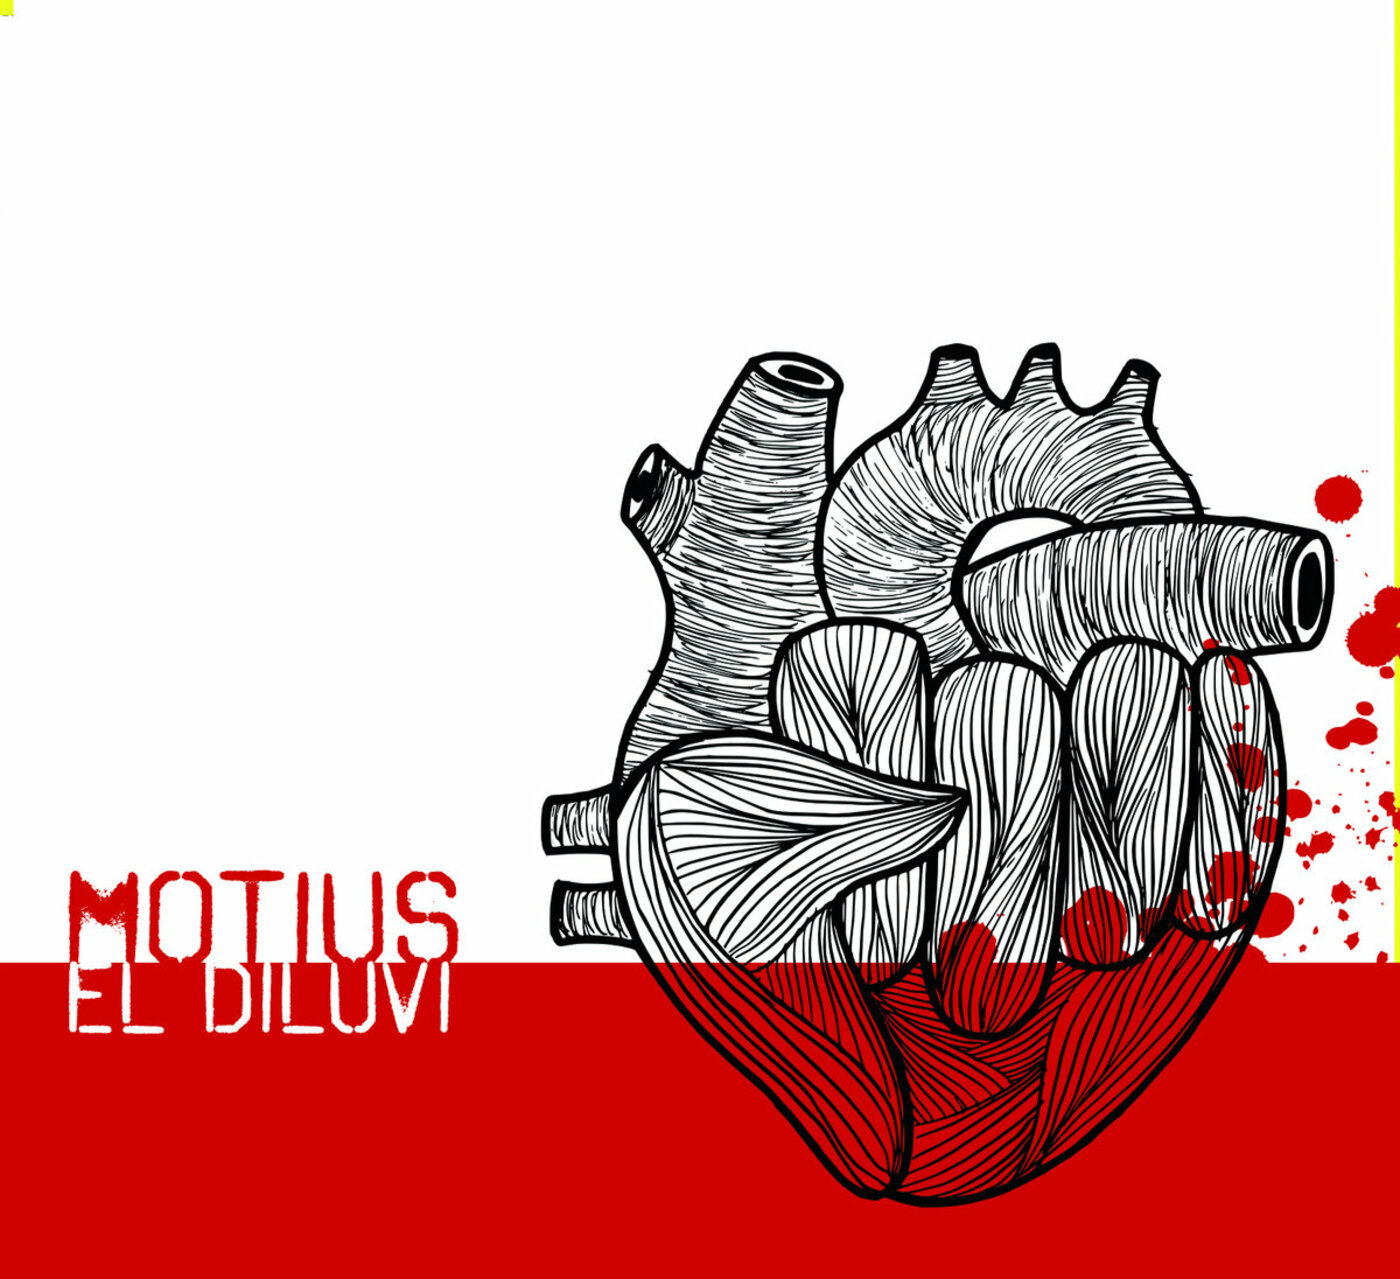 El Diluvi - Motius | musica en valencià